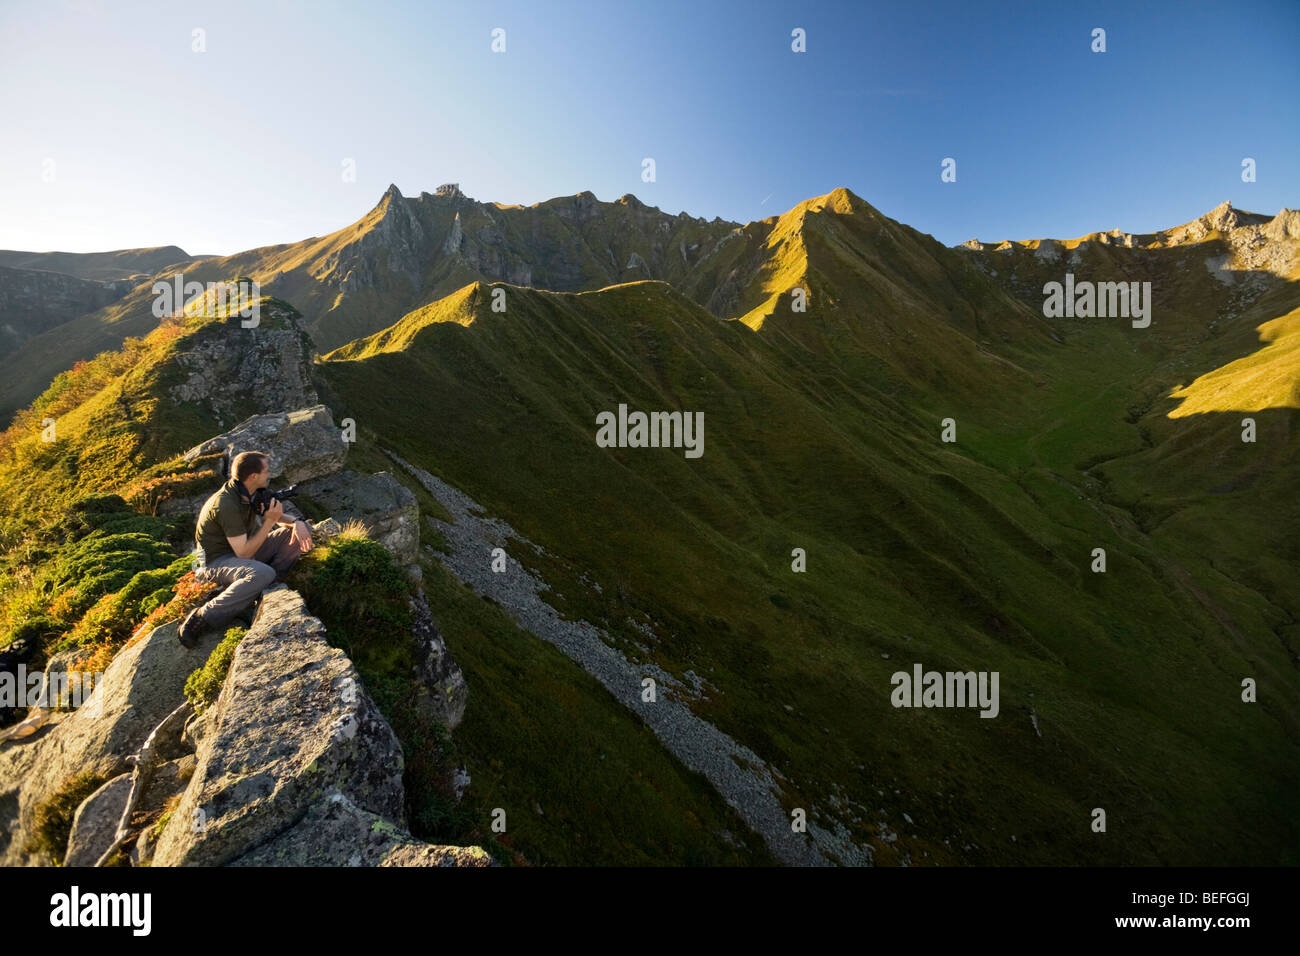 Temprano en la mañana, un fotógrafo contemplando el 'Val de Courre' (Auvernia). Photographe admirant le Val de Courre au matin. Foto de stock